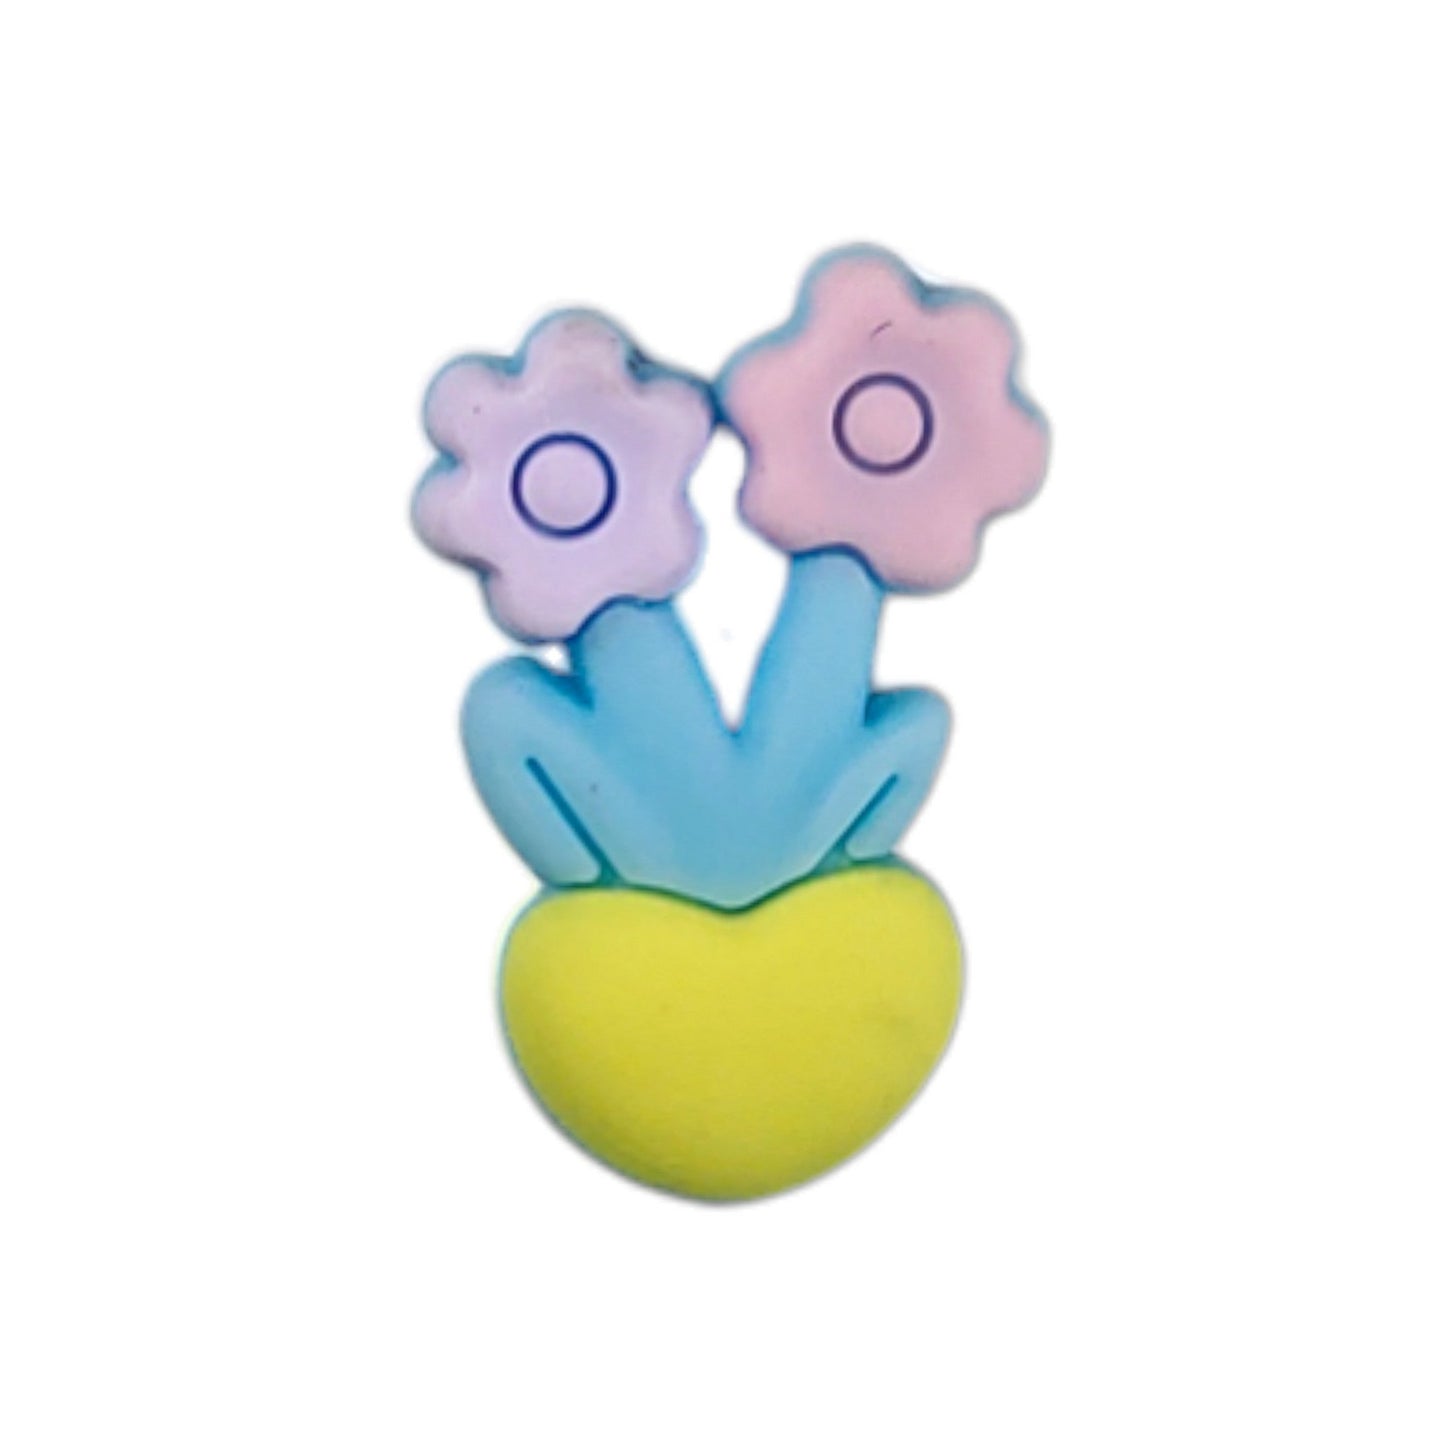 Indian Petals Flower Shap Soft Silicon Resin Mix Motif For Craft Design Or Decoration, 60 Pcs, MIX-13549